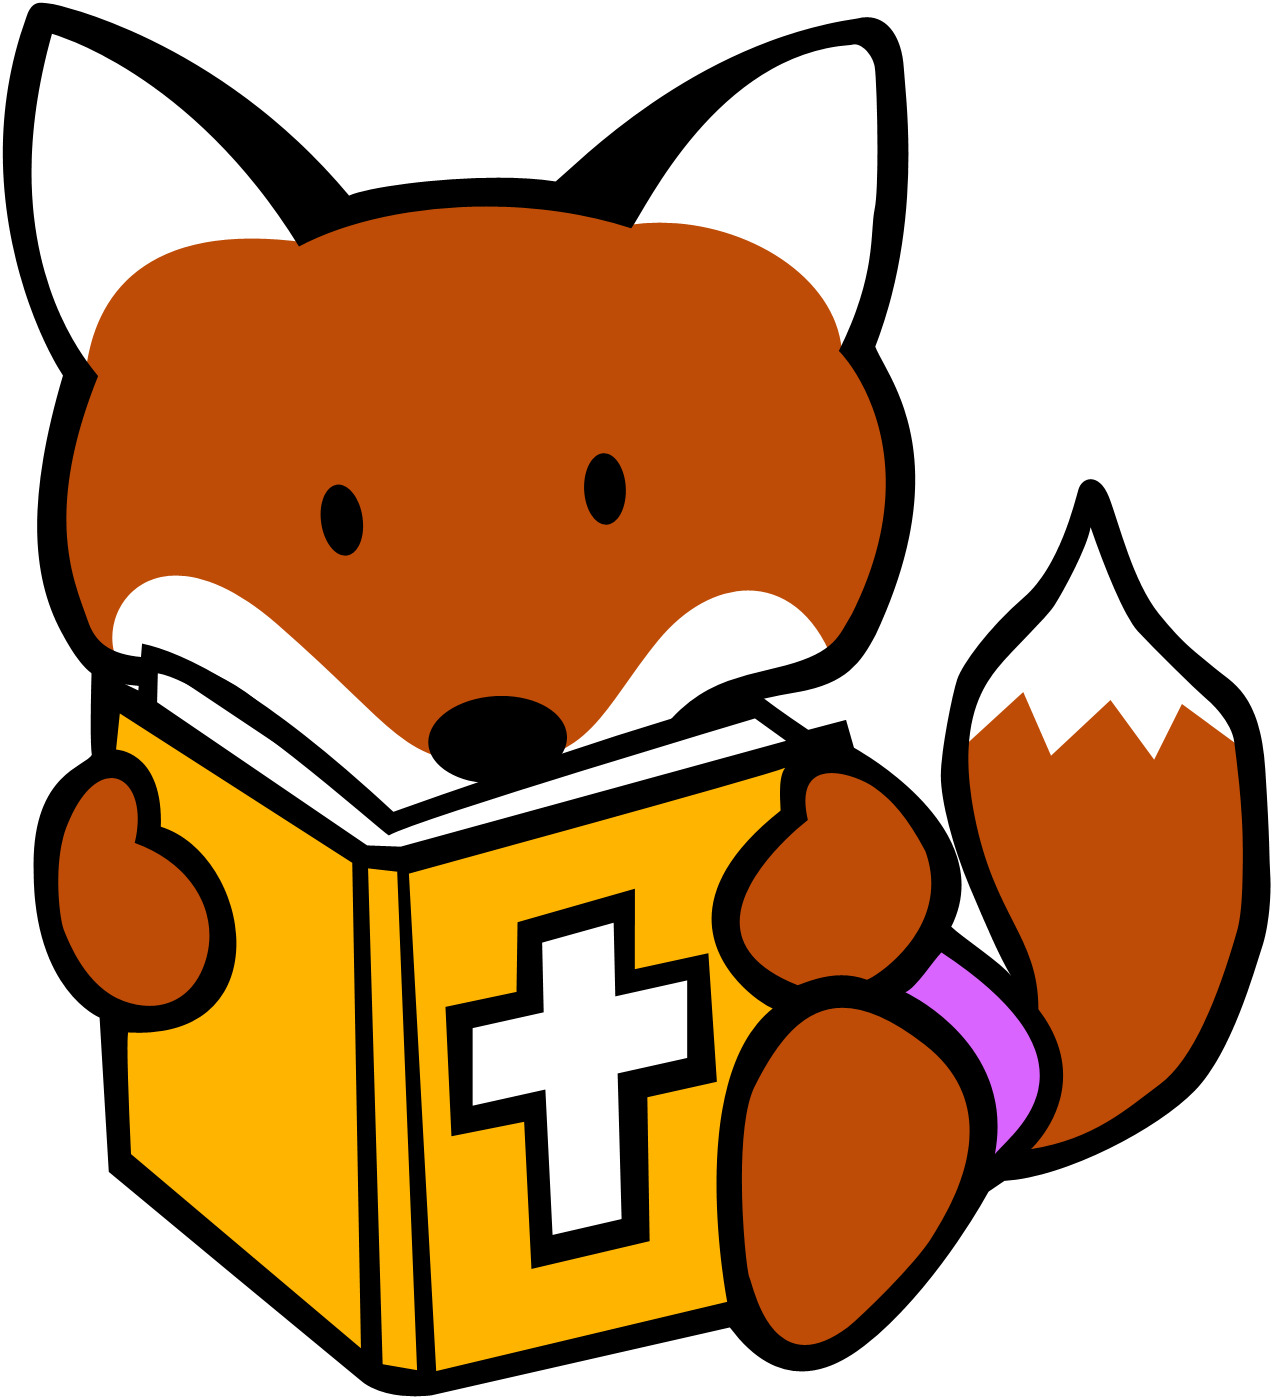 Reading fox. Fox Christianity.